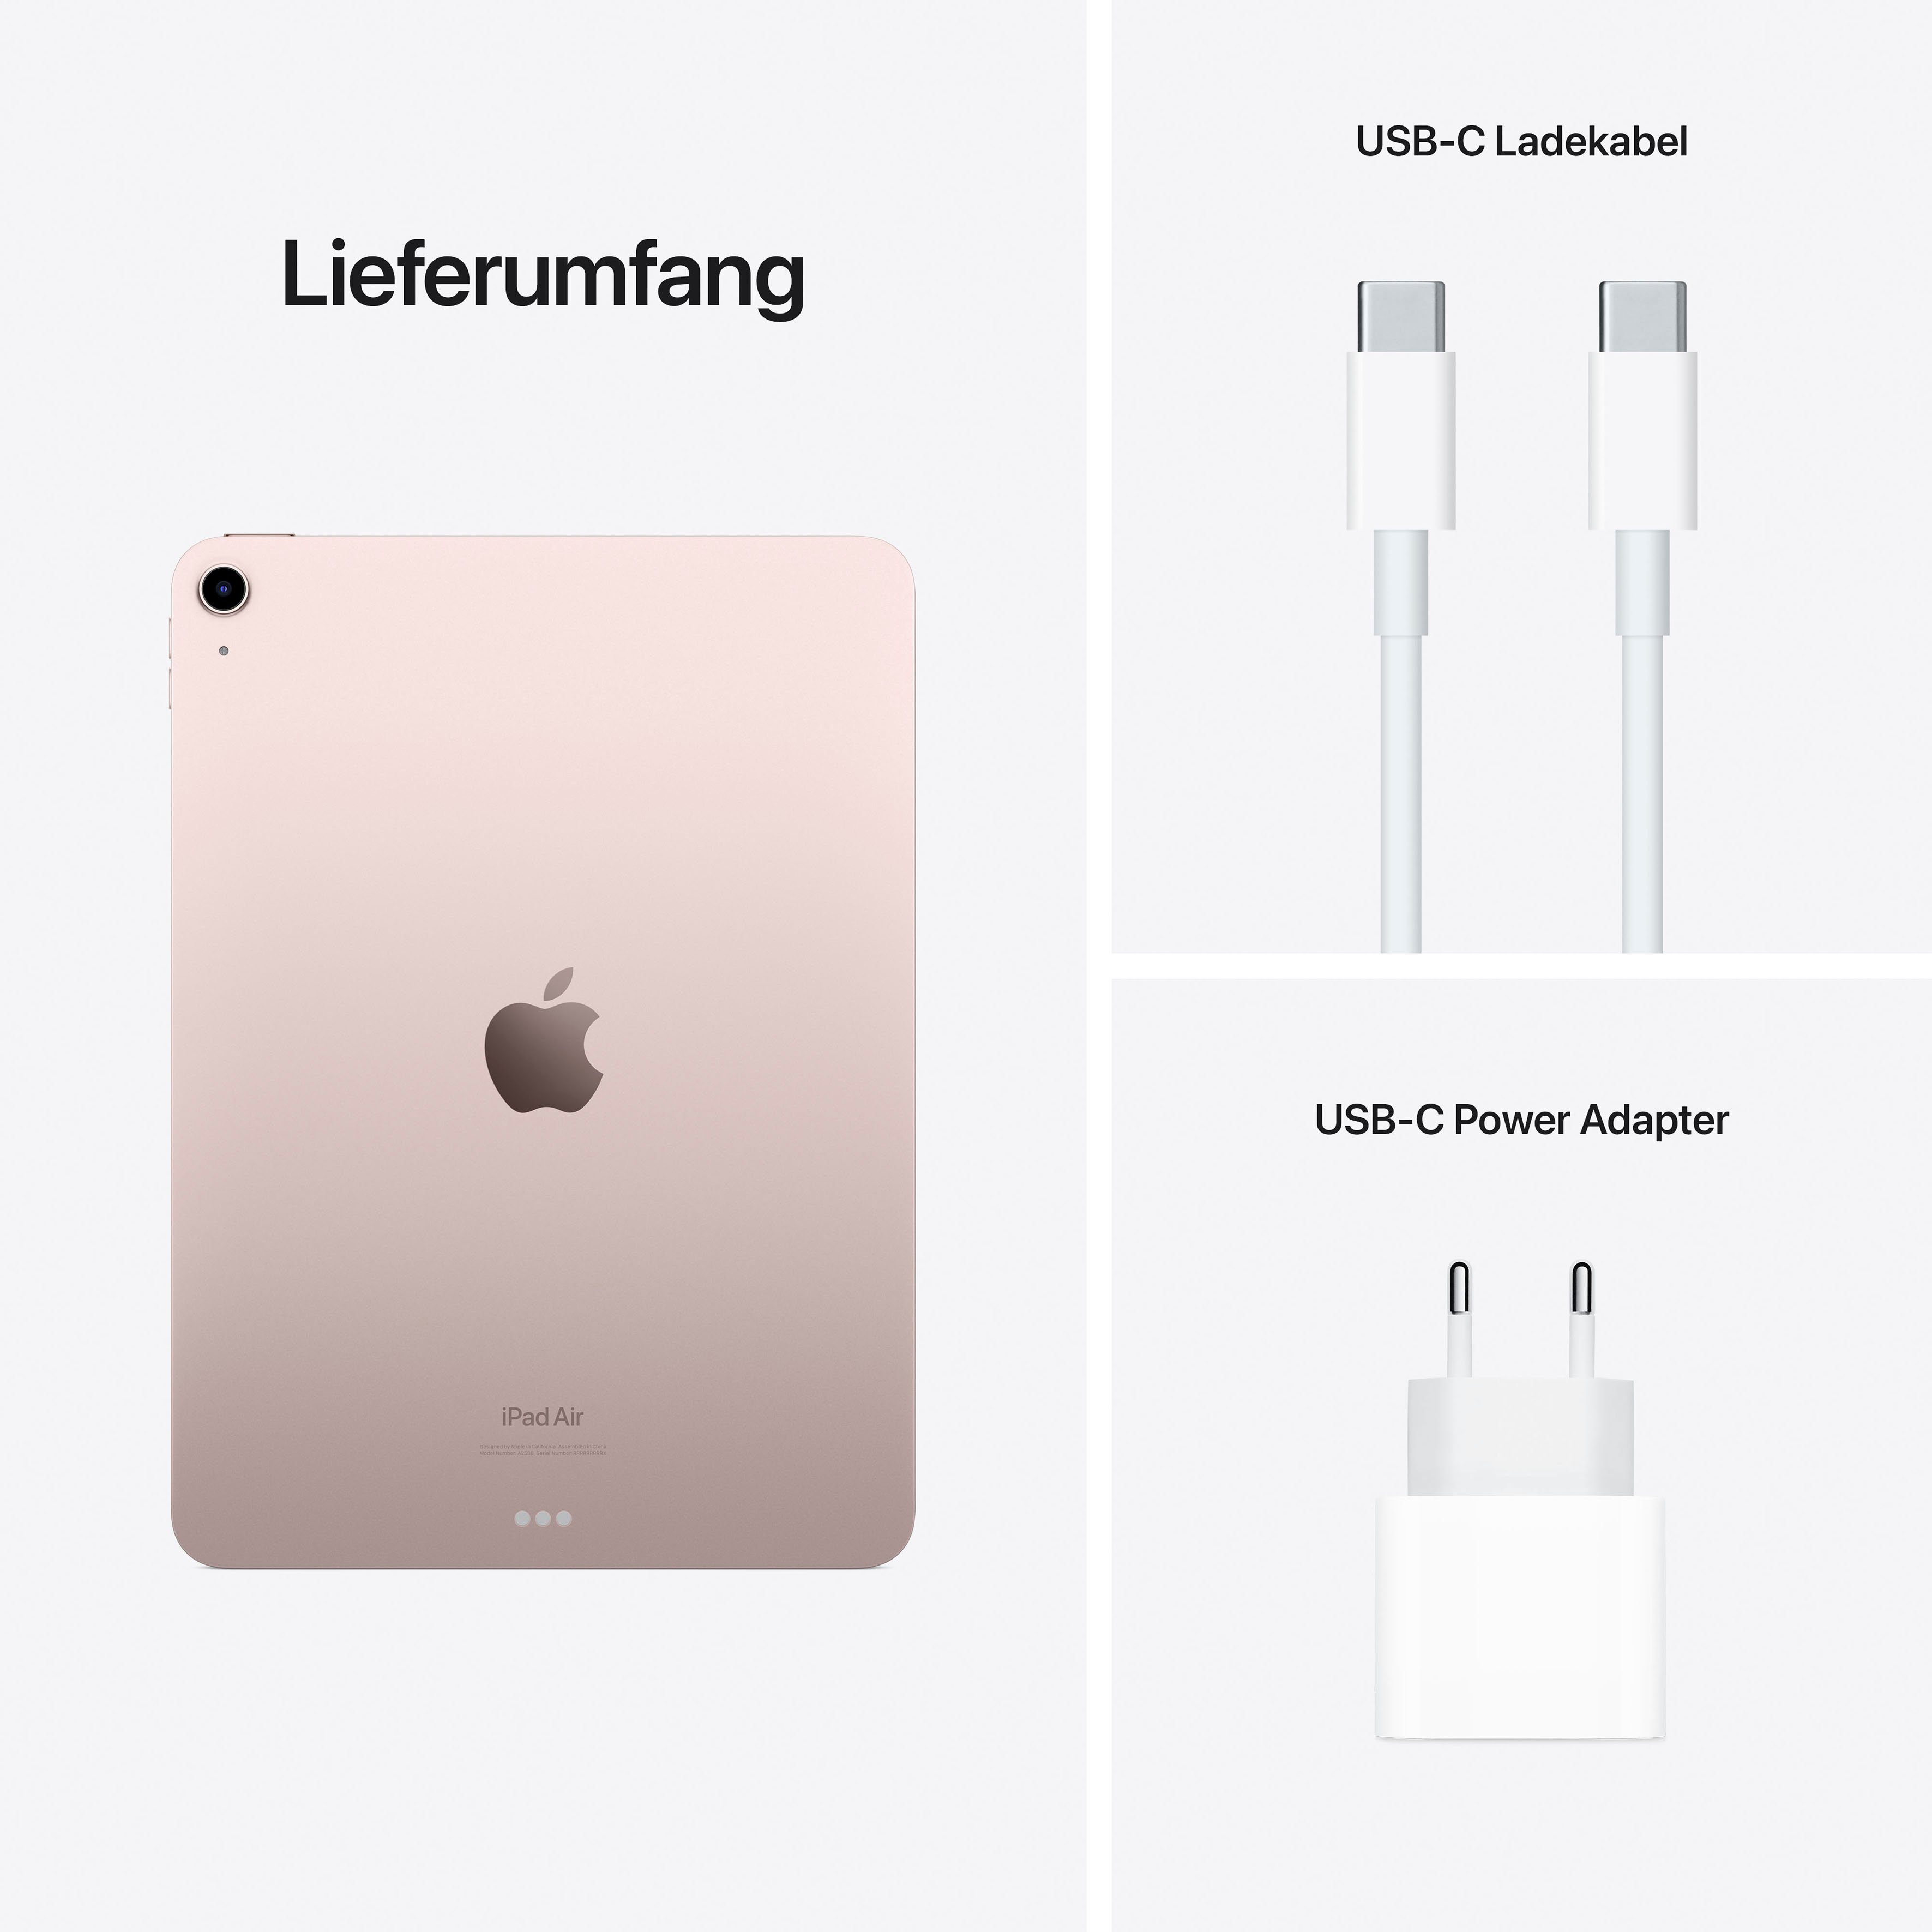 iPadOS) 256 iPad GB, Tablet Apple (2022) pink (10,9", Air